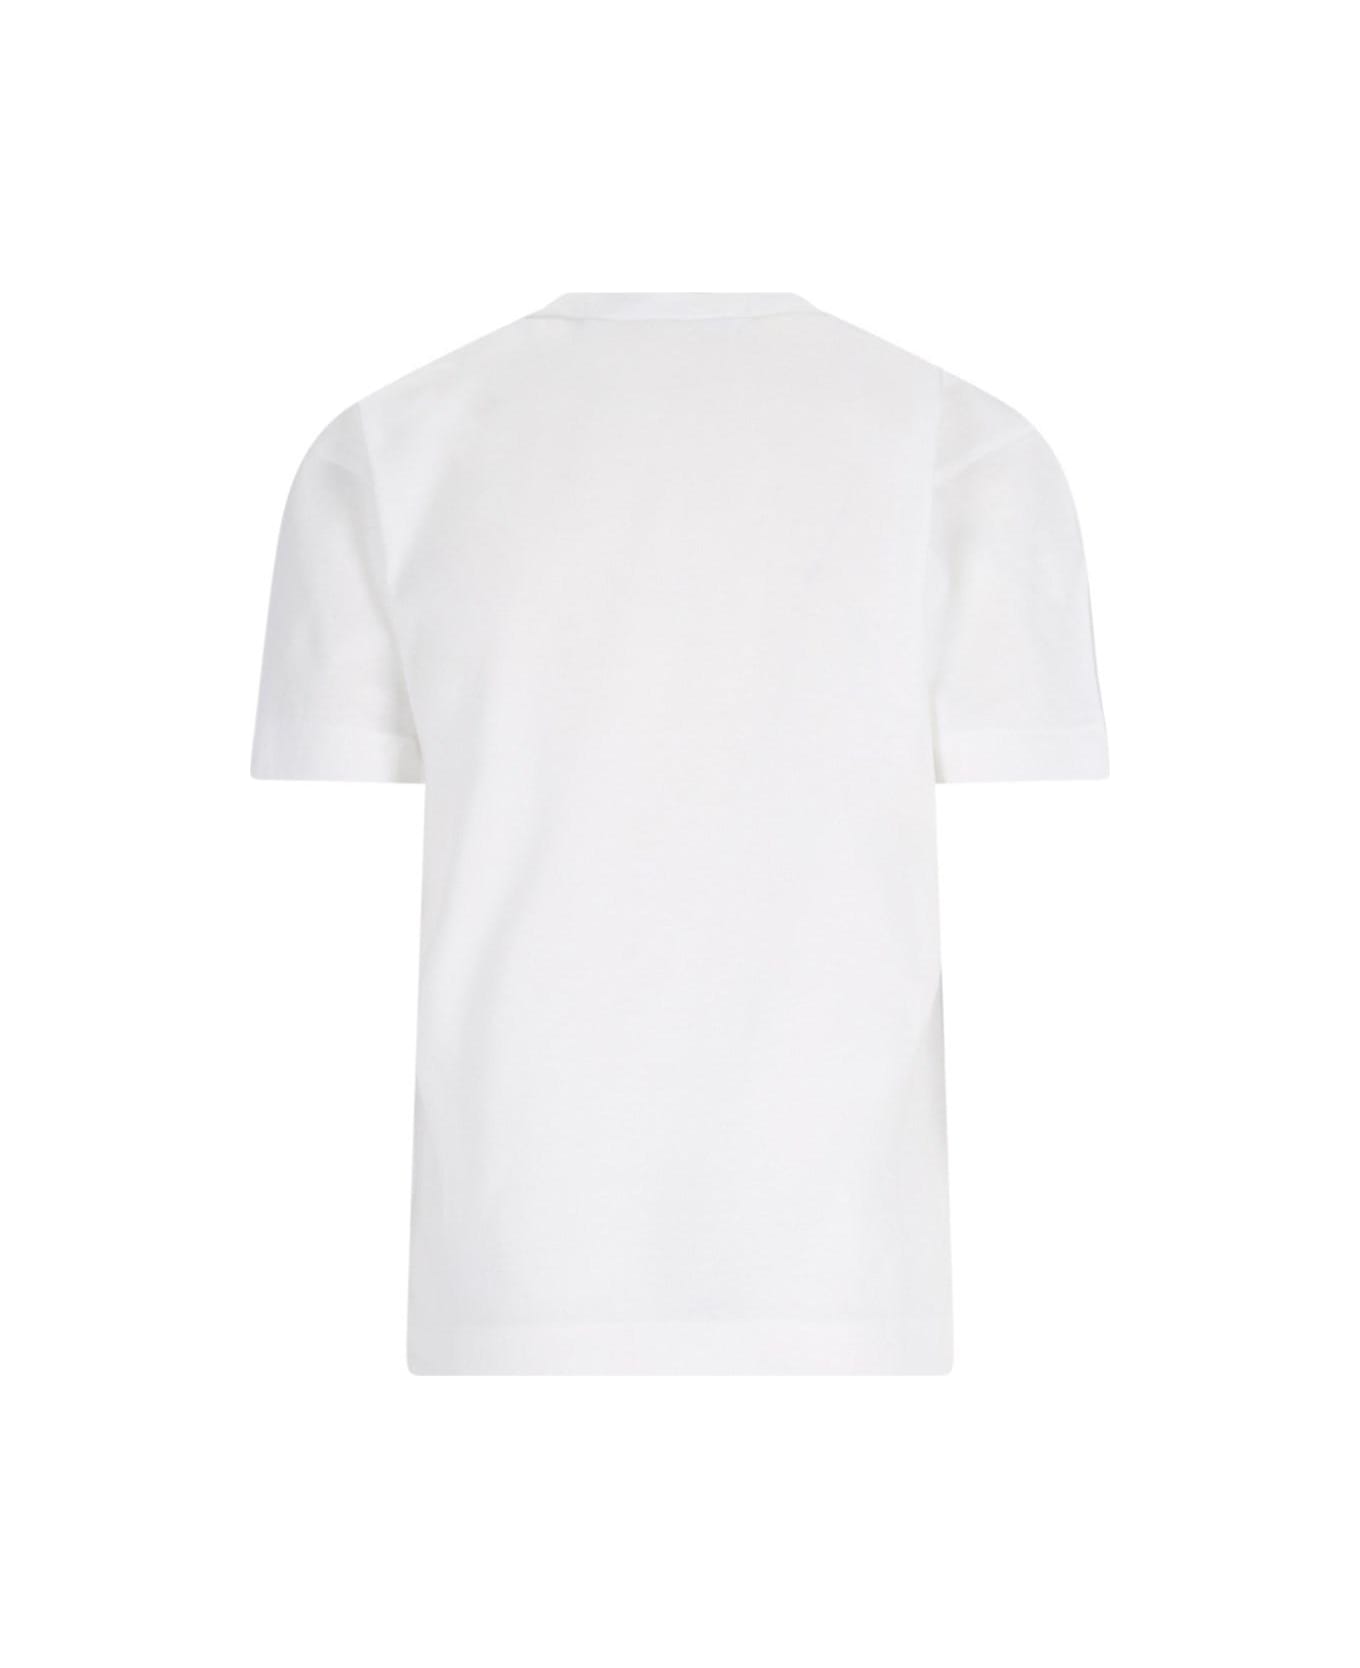 Comme des Garçons Play Logo T-shirt - White Tシャツ